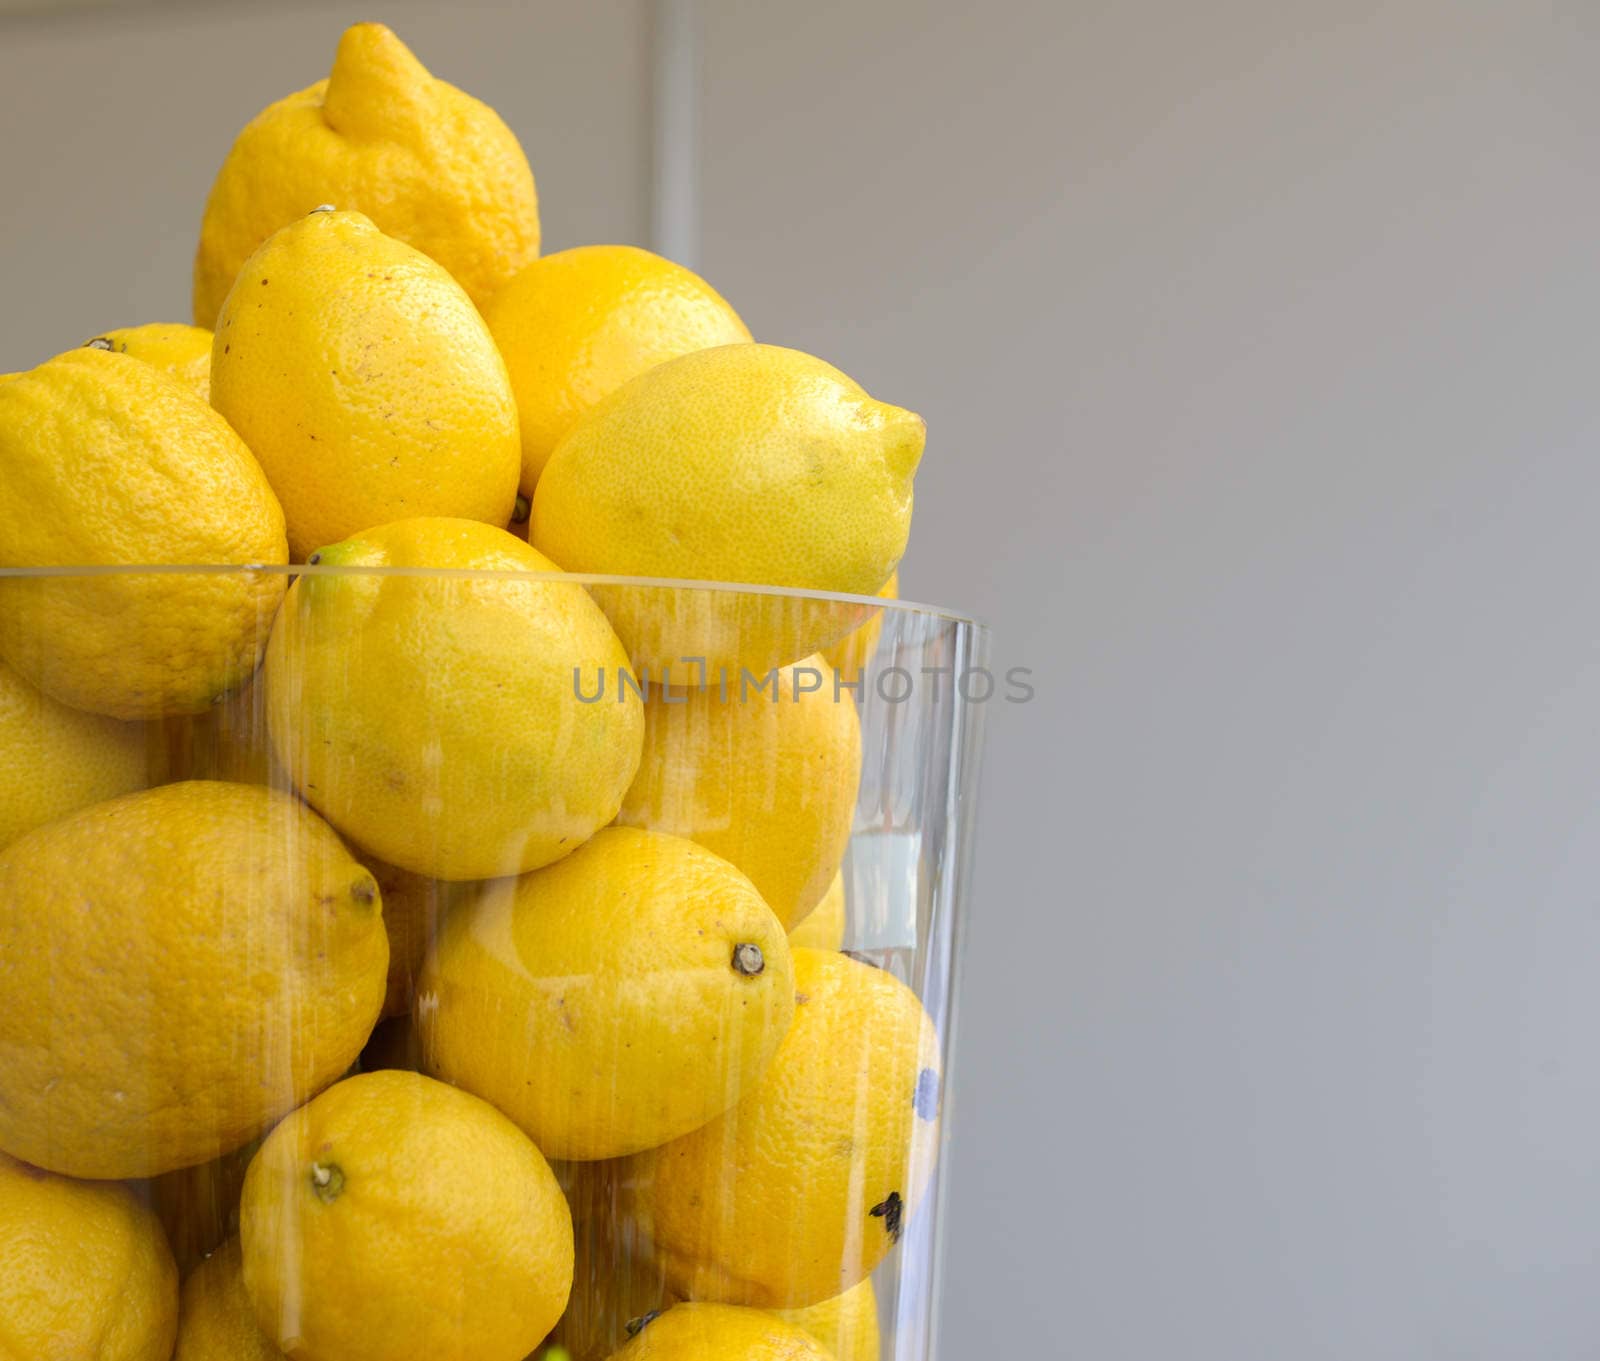 a lot of yellow ripe lemons in a glass jar